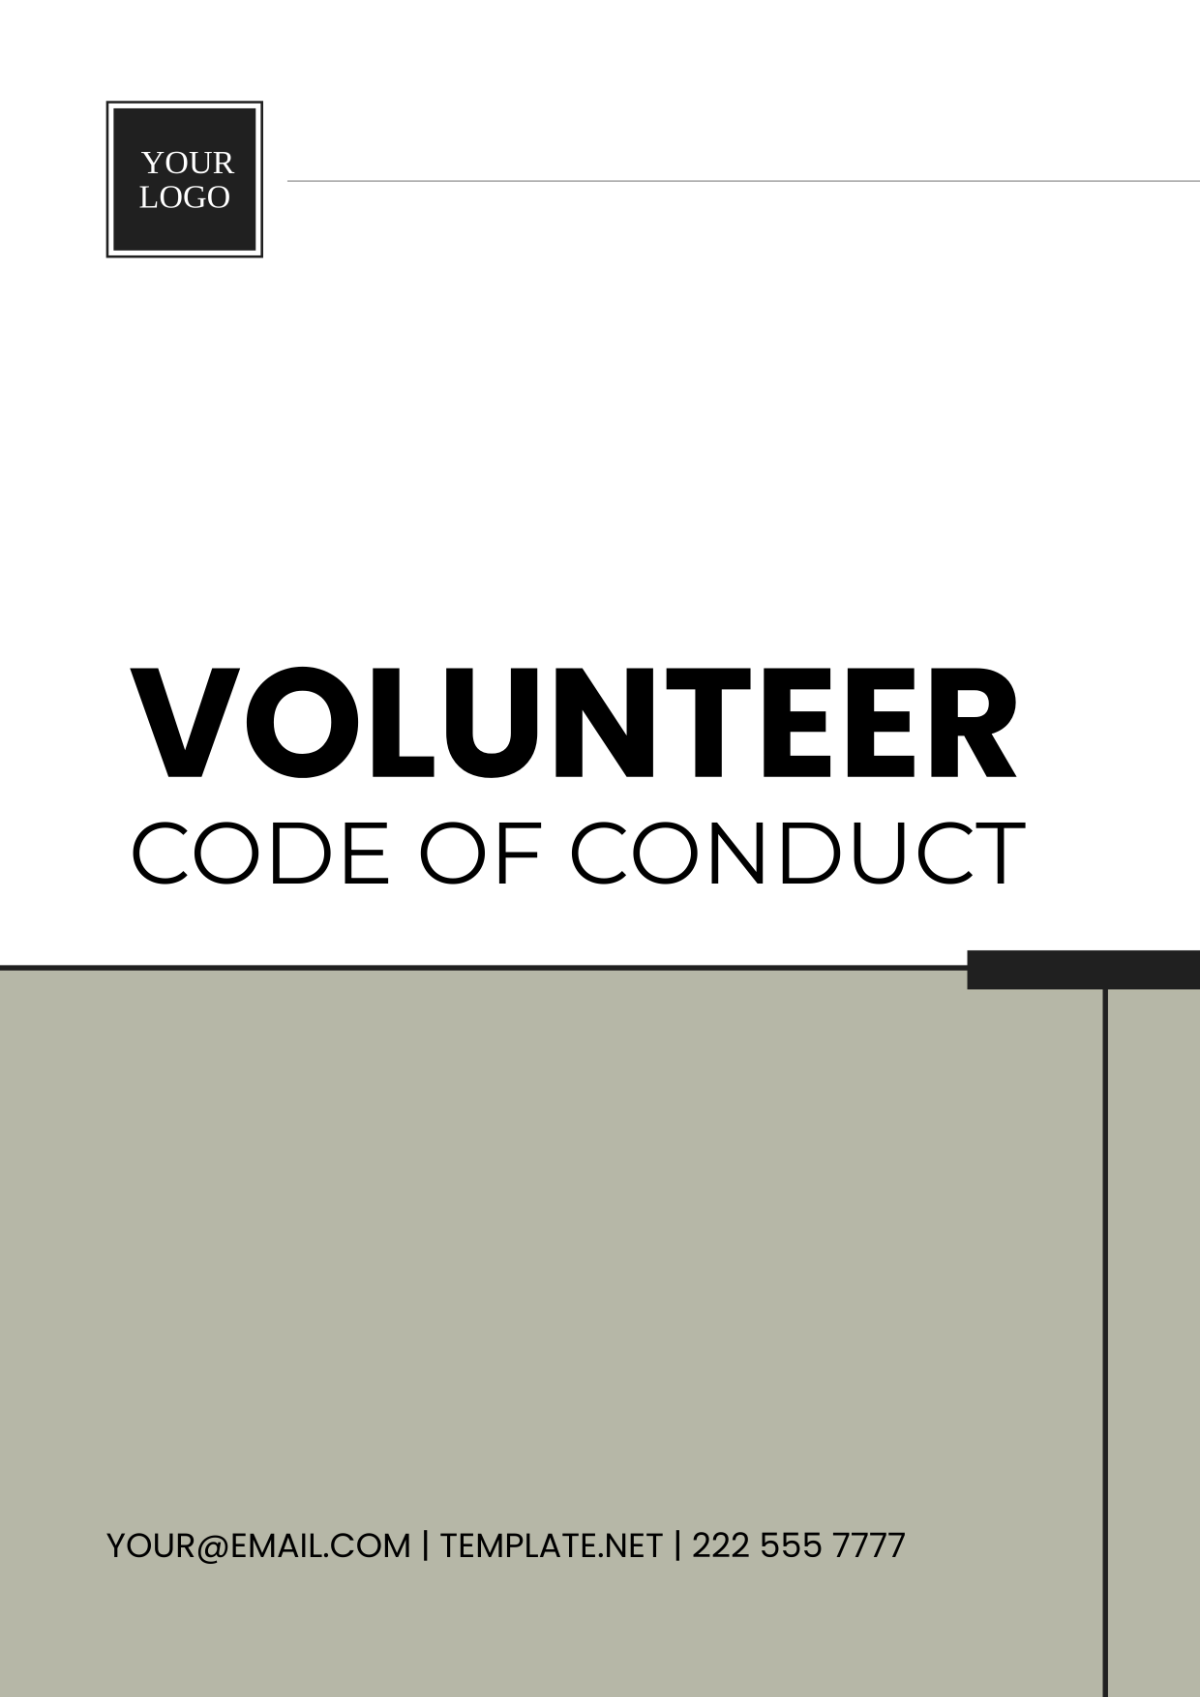 Volunteer Code of Conduct Template